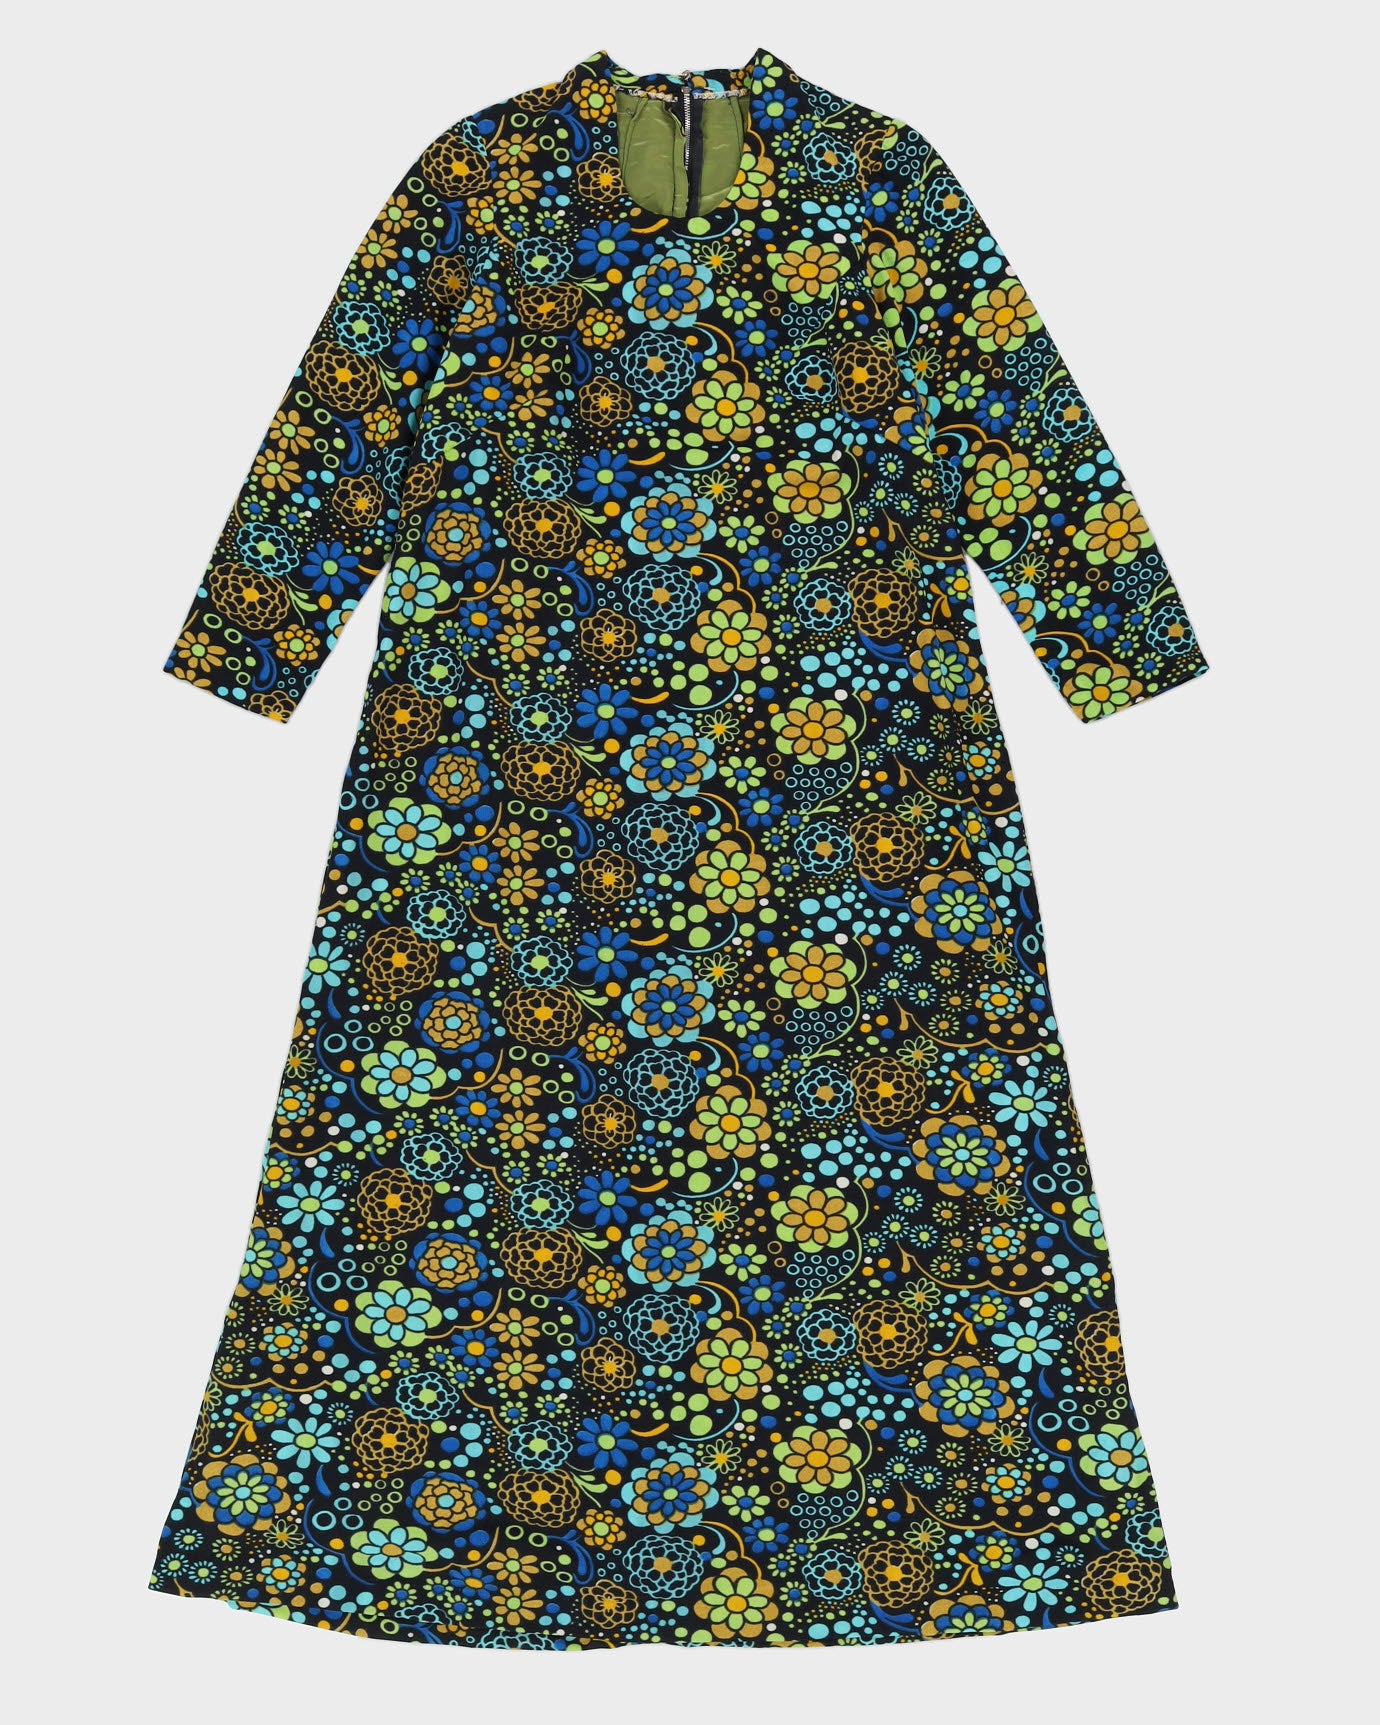 Vintage 1970s Blue Patterned Maxi Dress - S